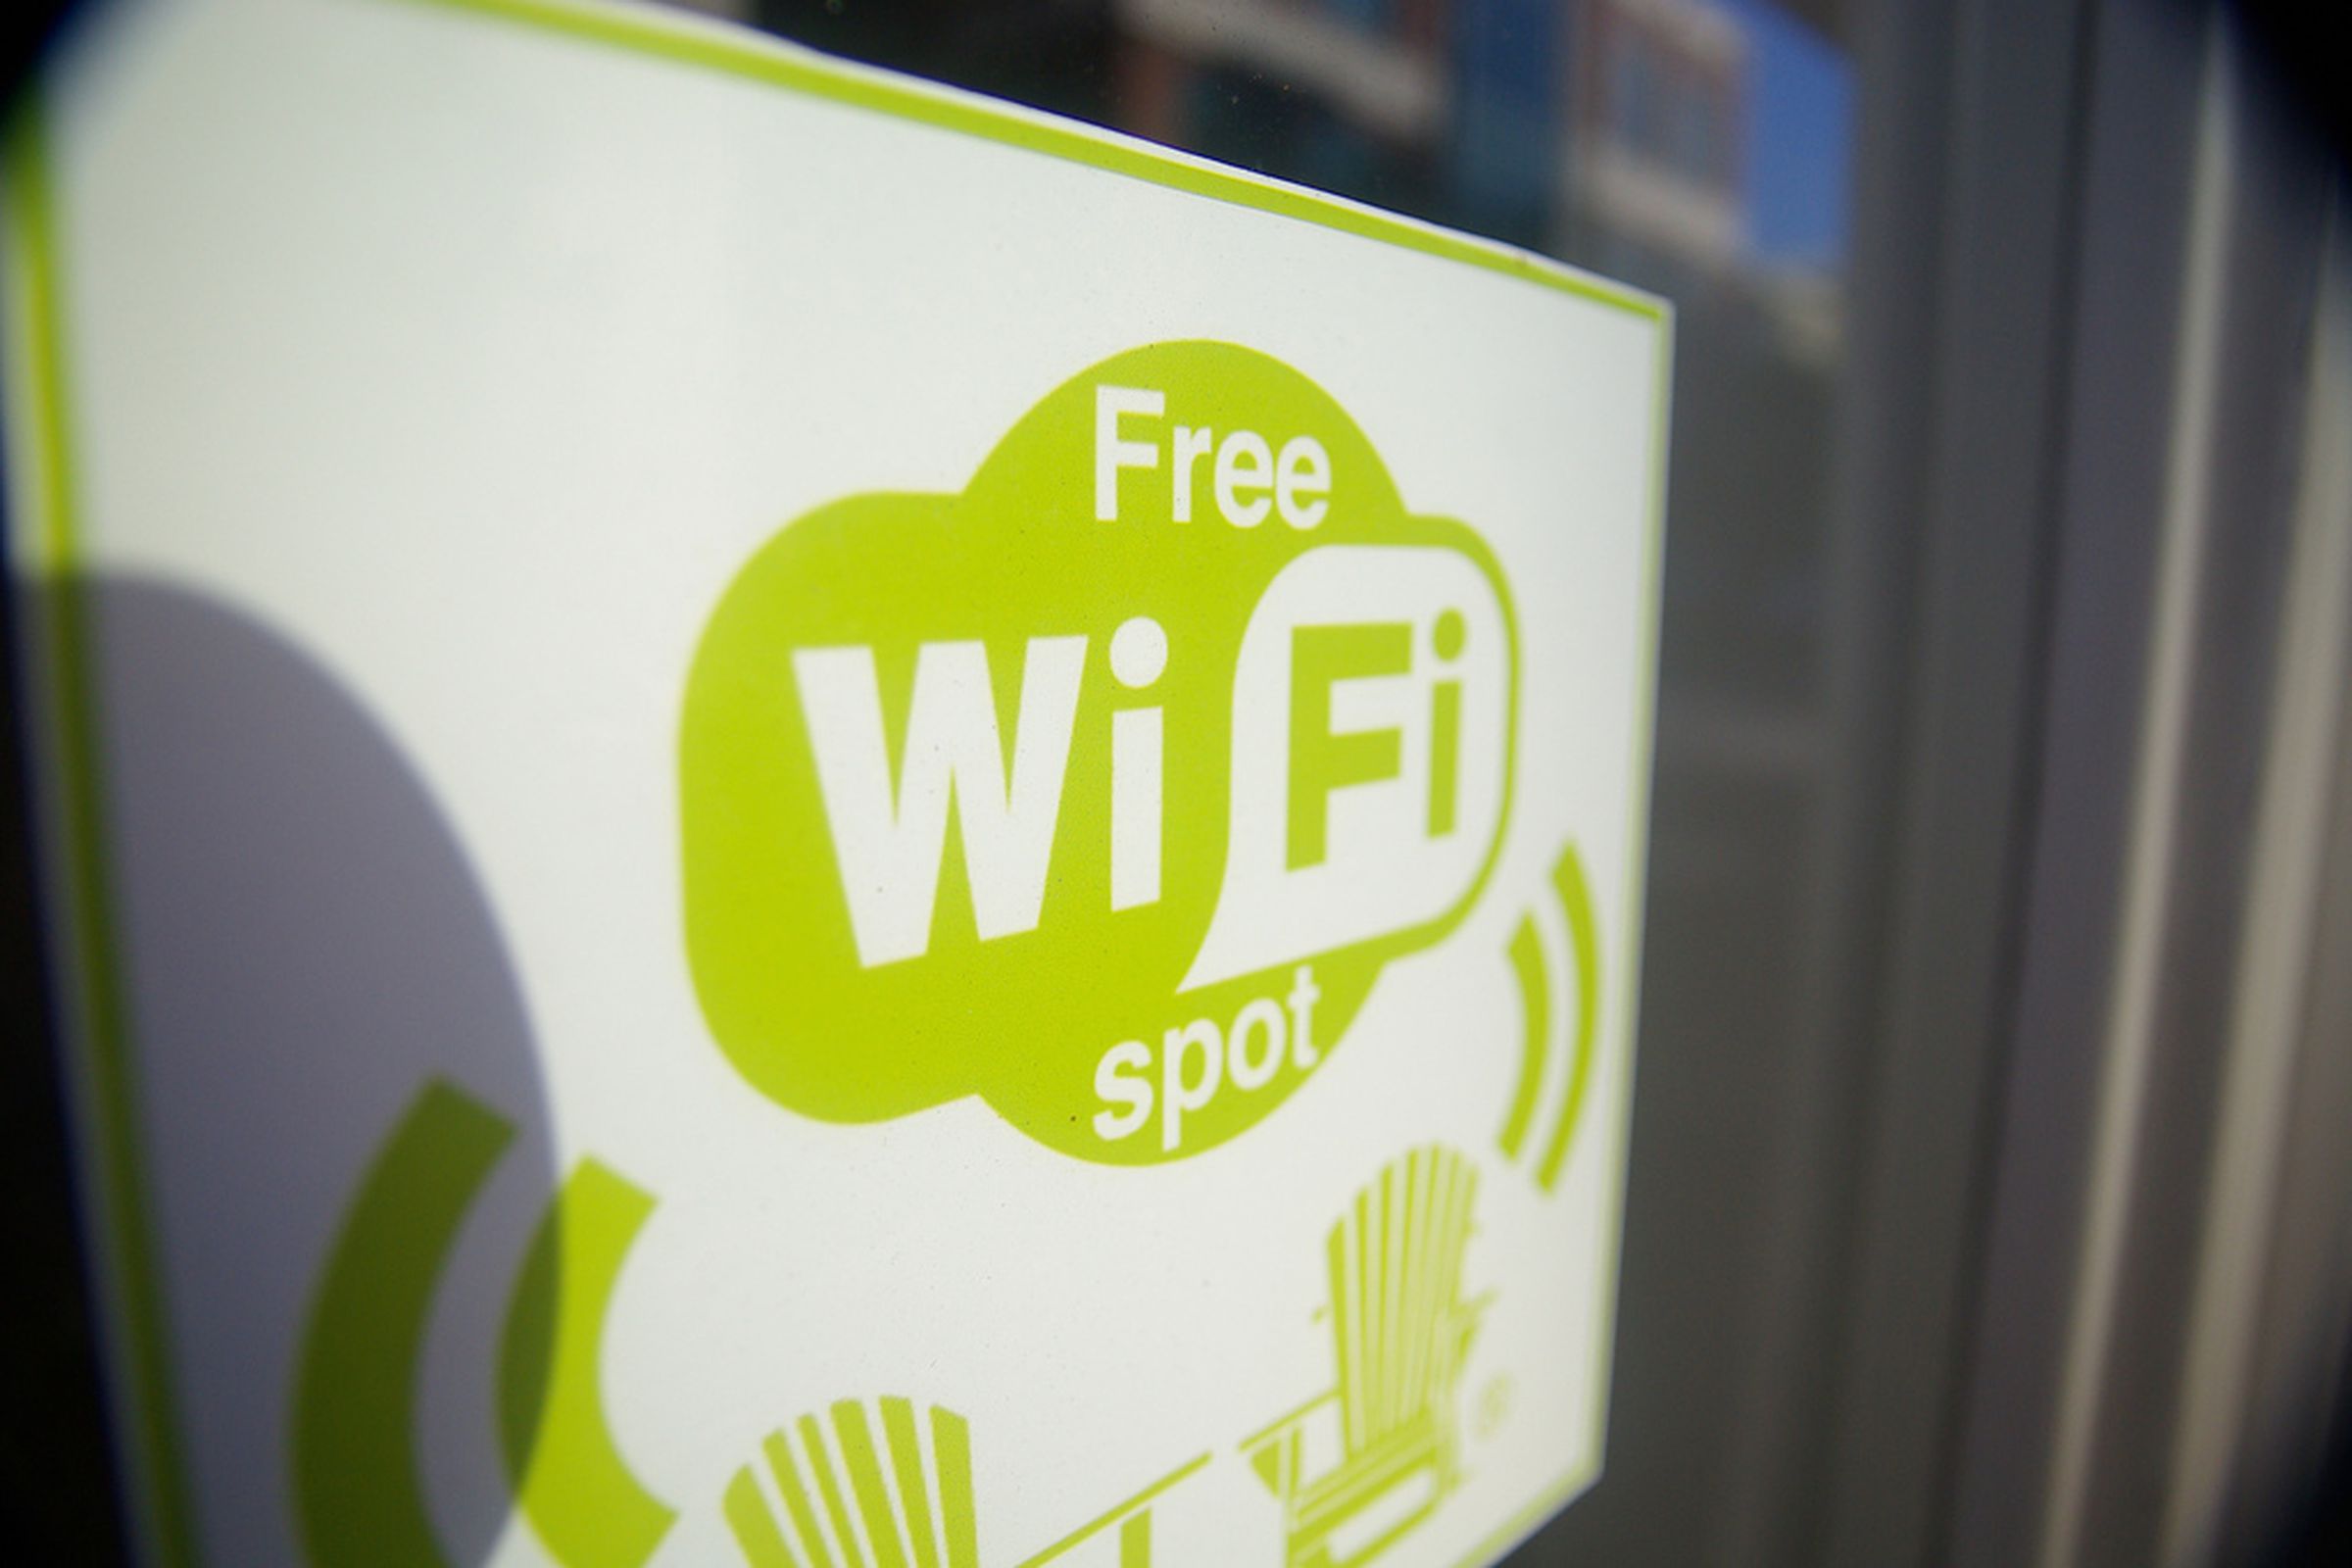 Free Wi-Fi hotspot (FLICKR)